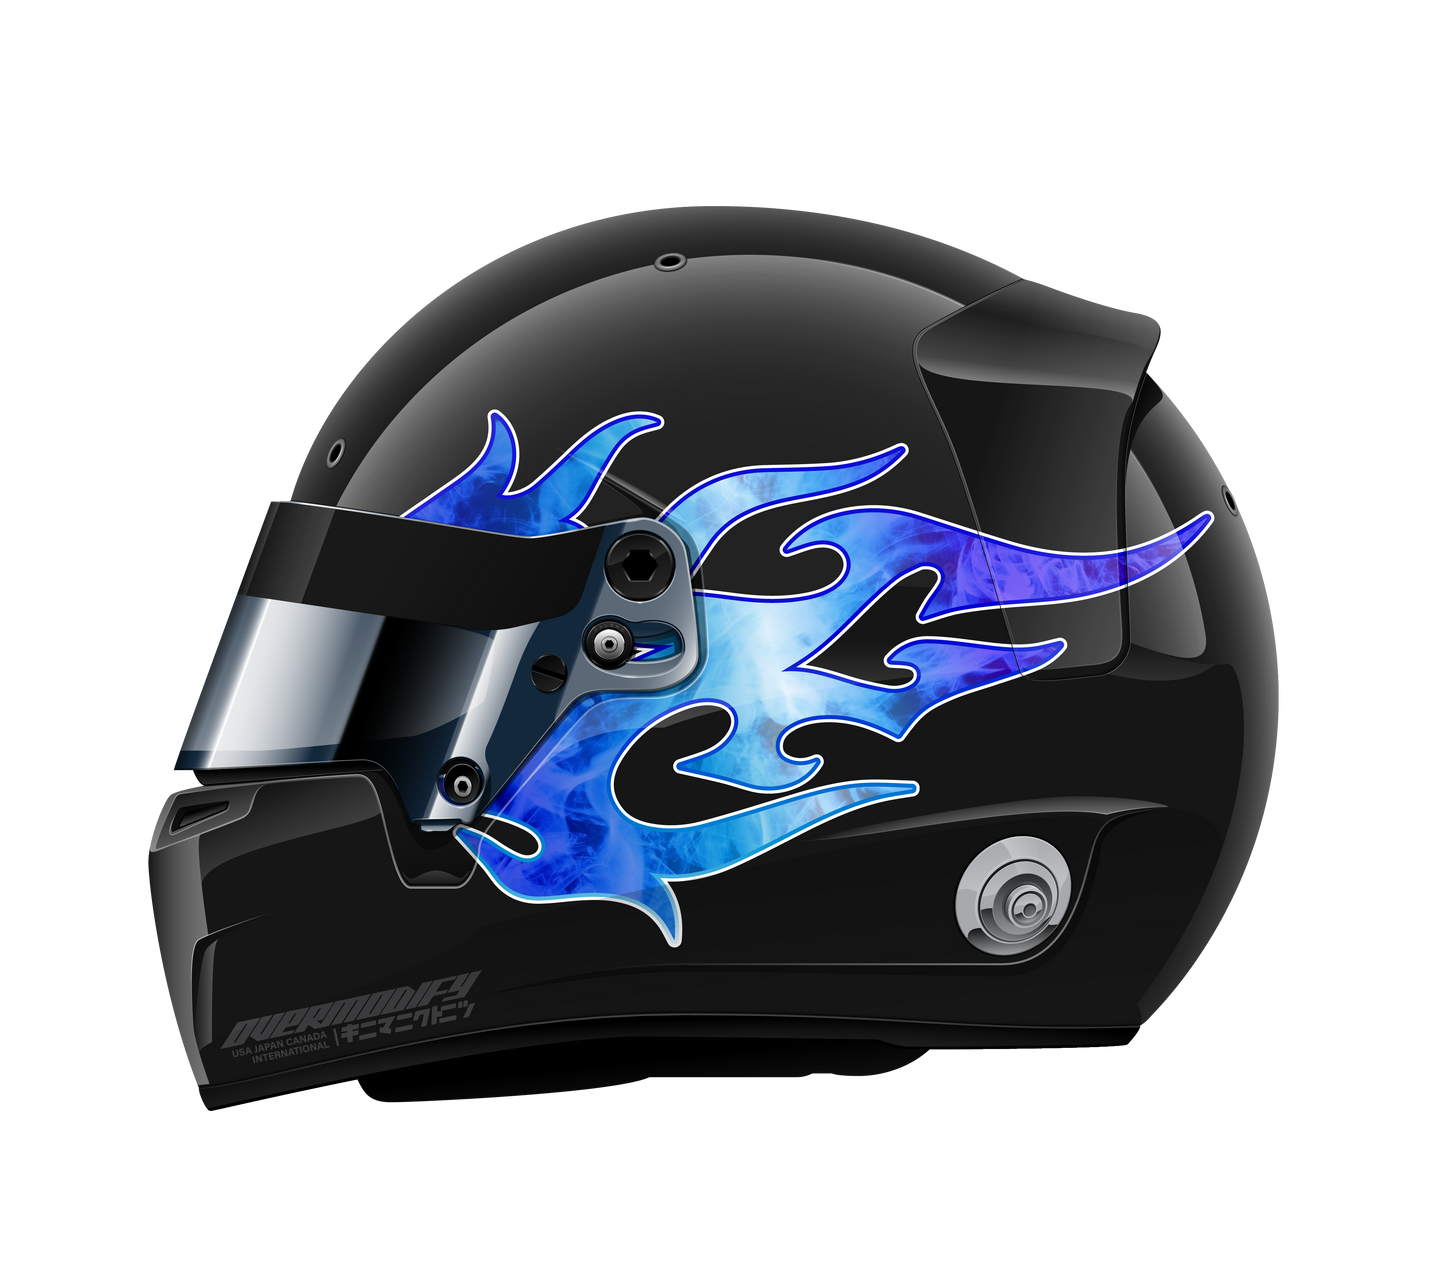 NETSU - 头盔图形套件